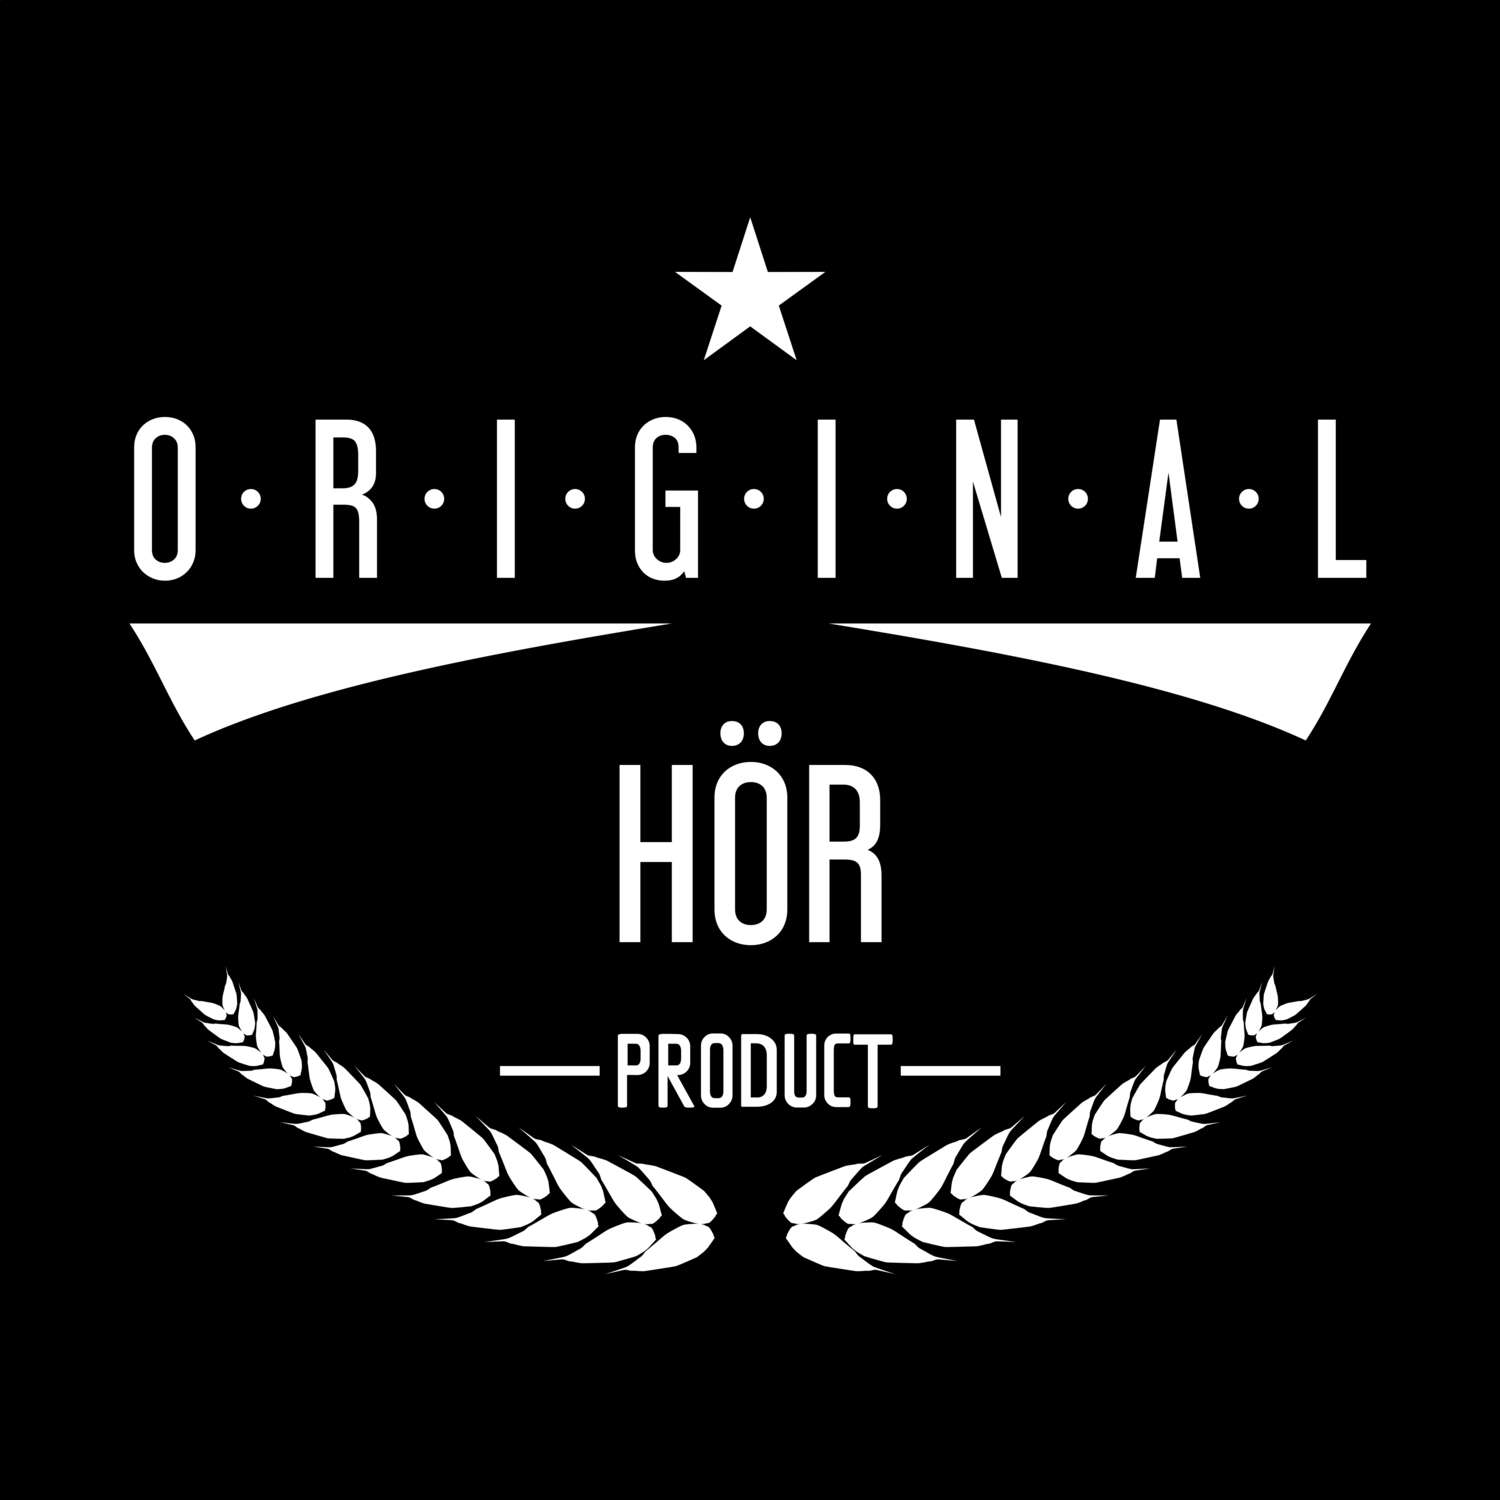 Hör T-Shirt »Original Product«